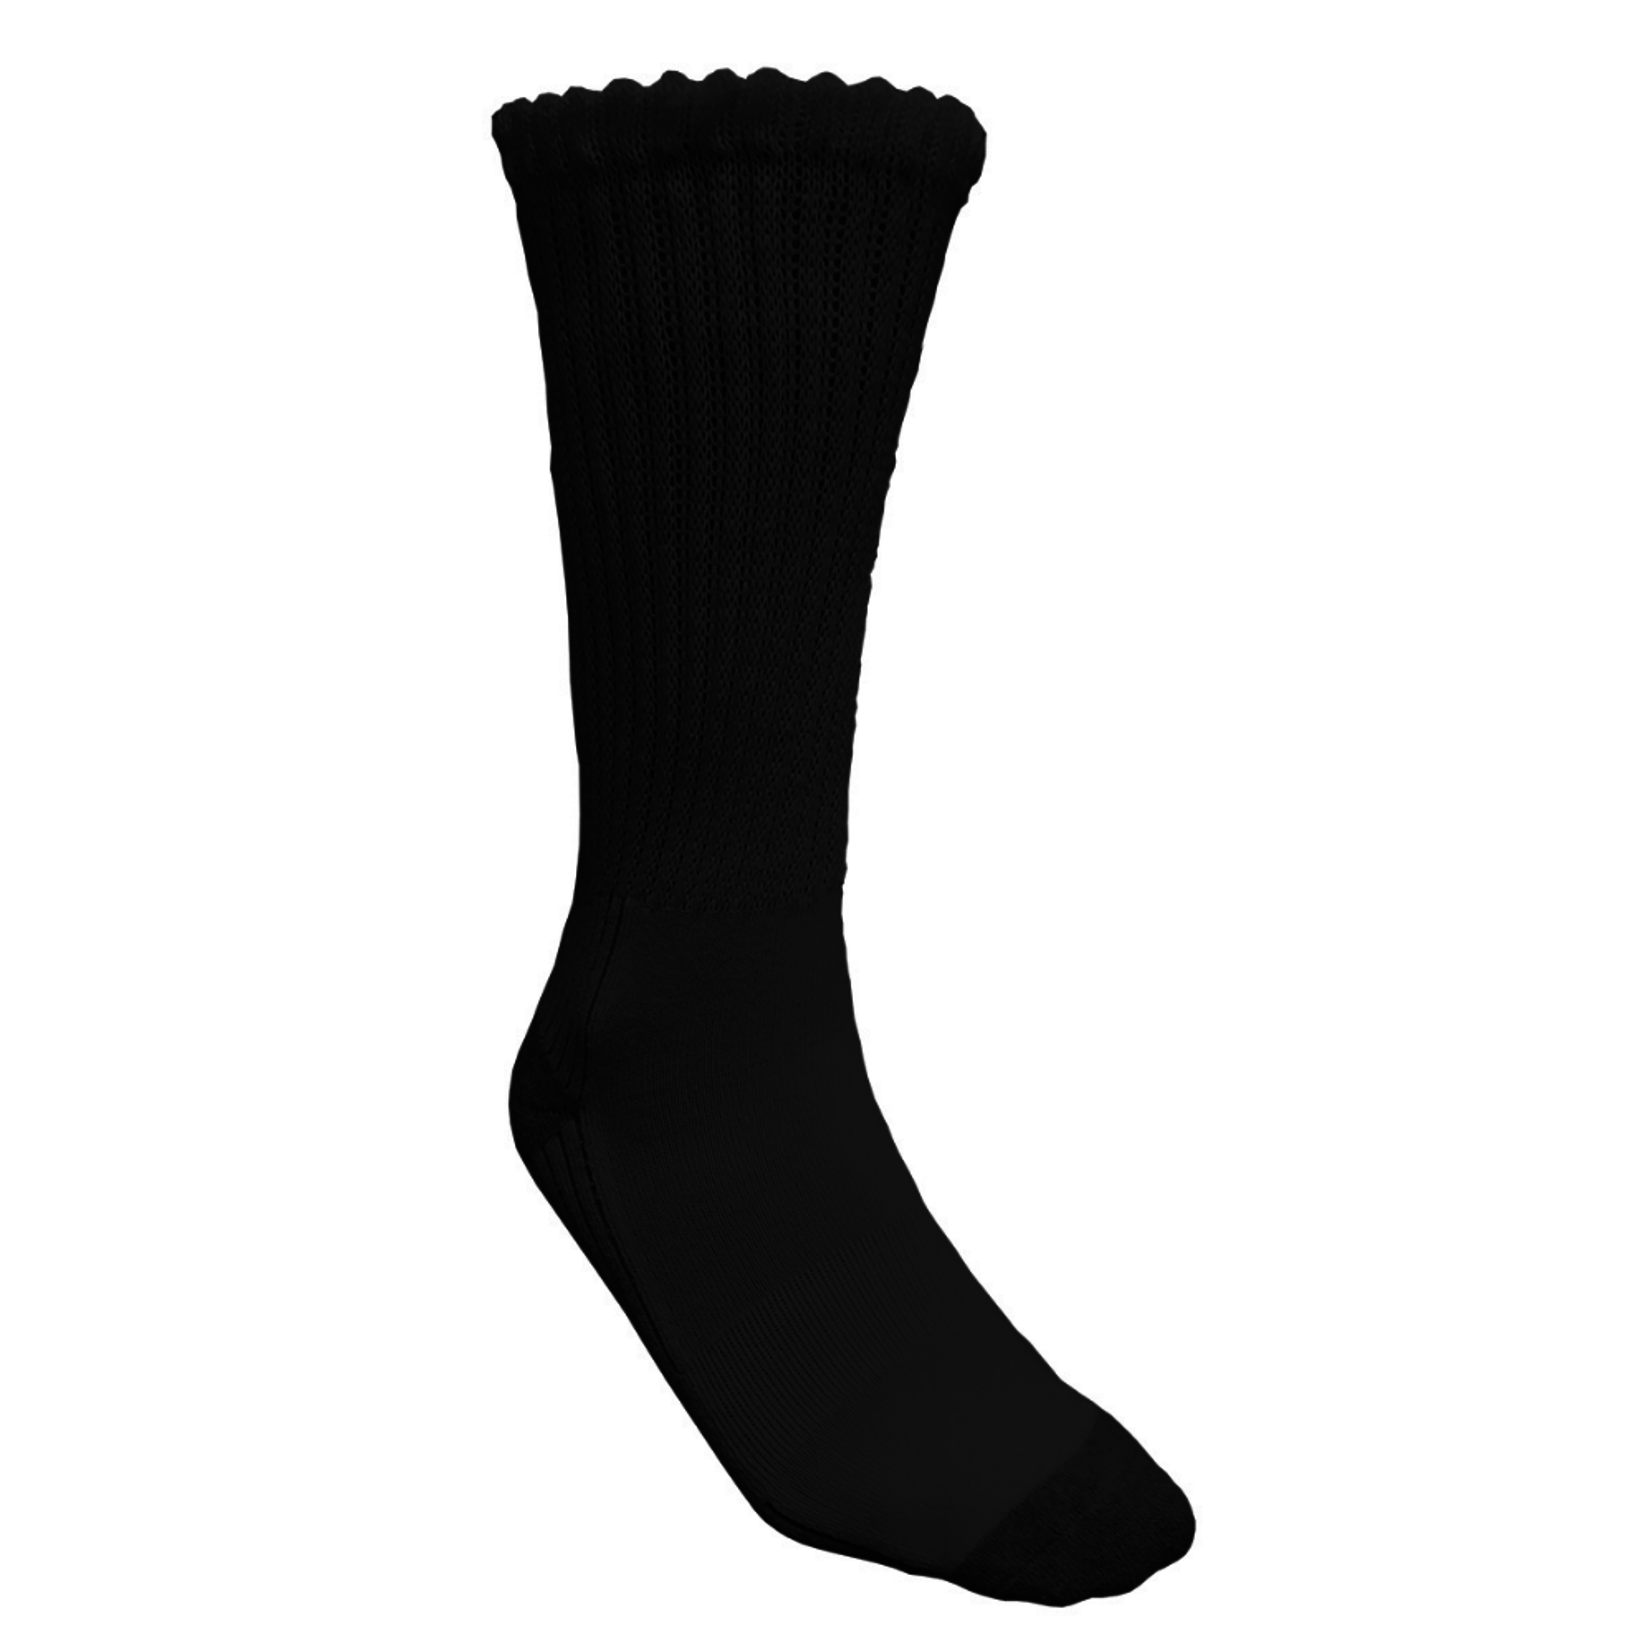 Diabetic Super Sock Black - M